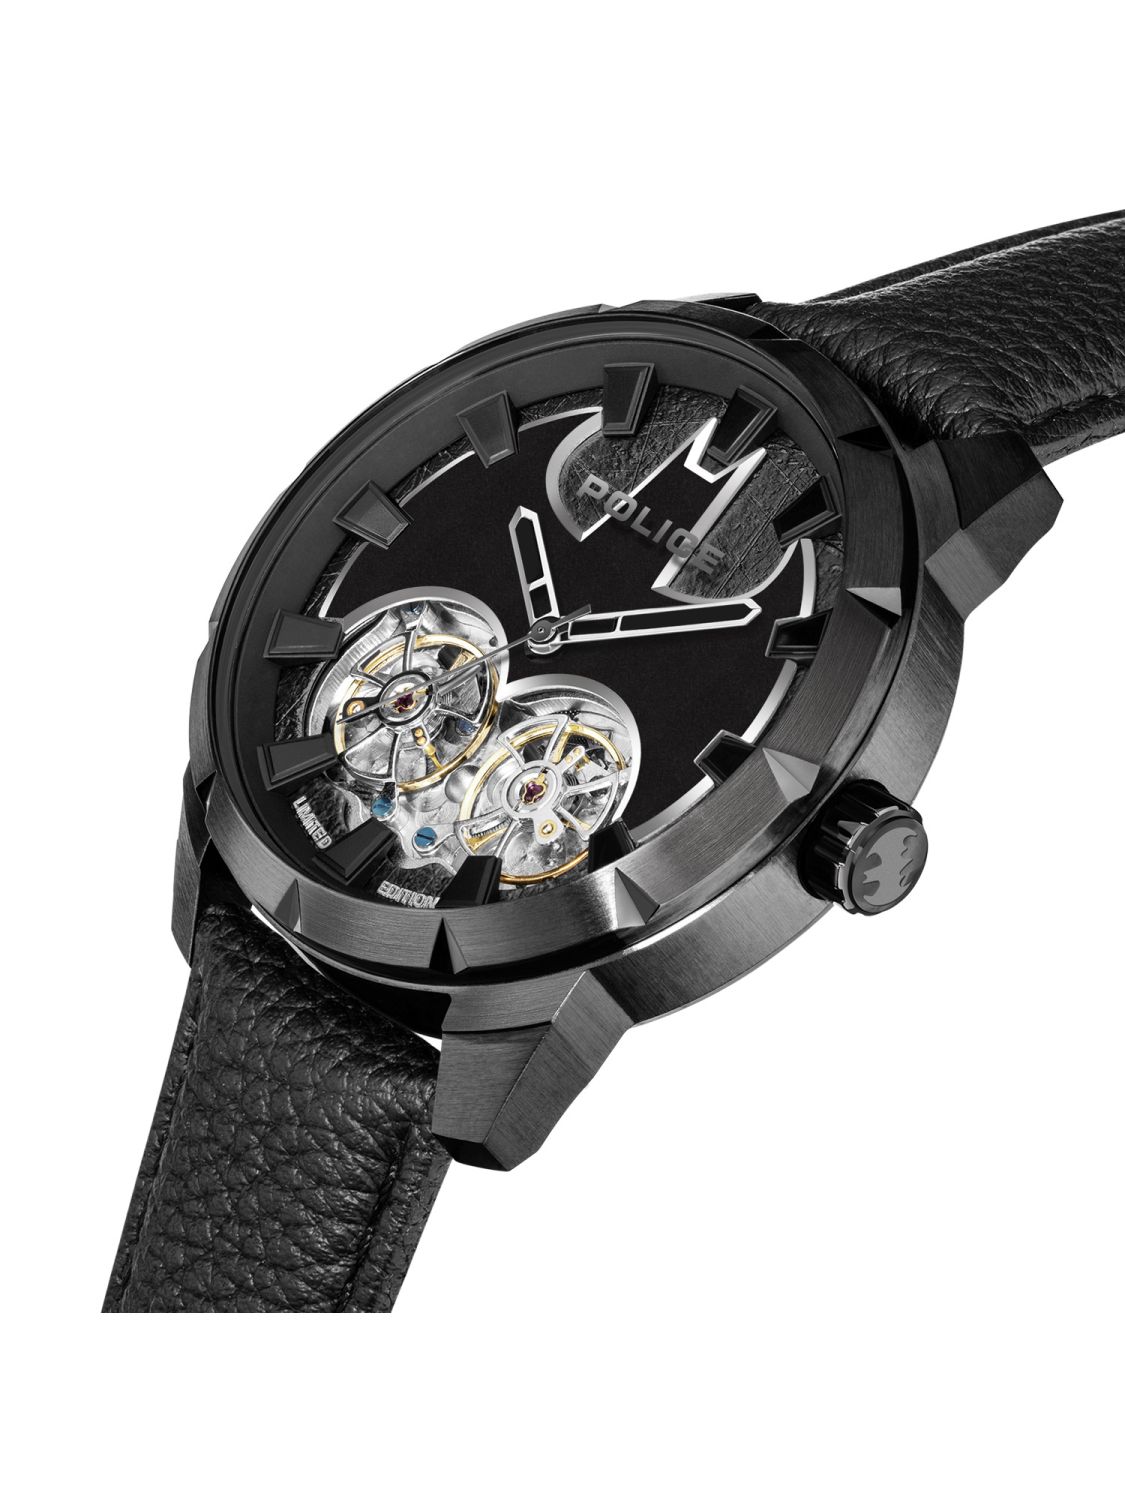 Batman • Black Wristwatch Automatic Police uhrcenter PEWGE0022701 Limited Edition